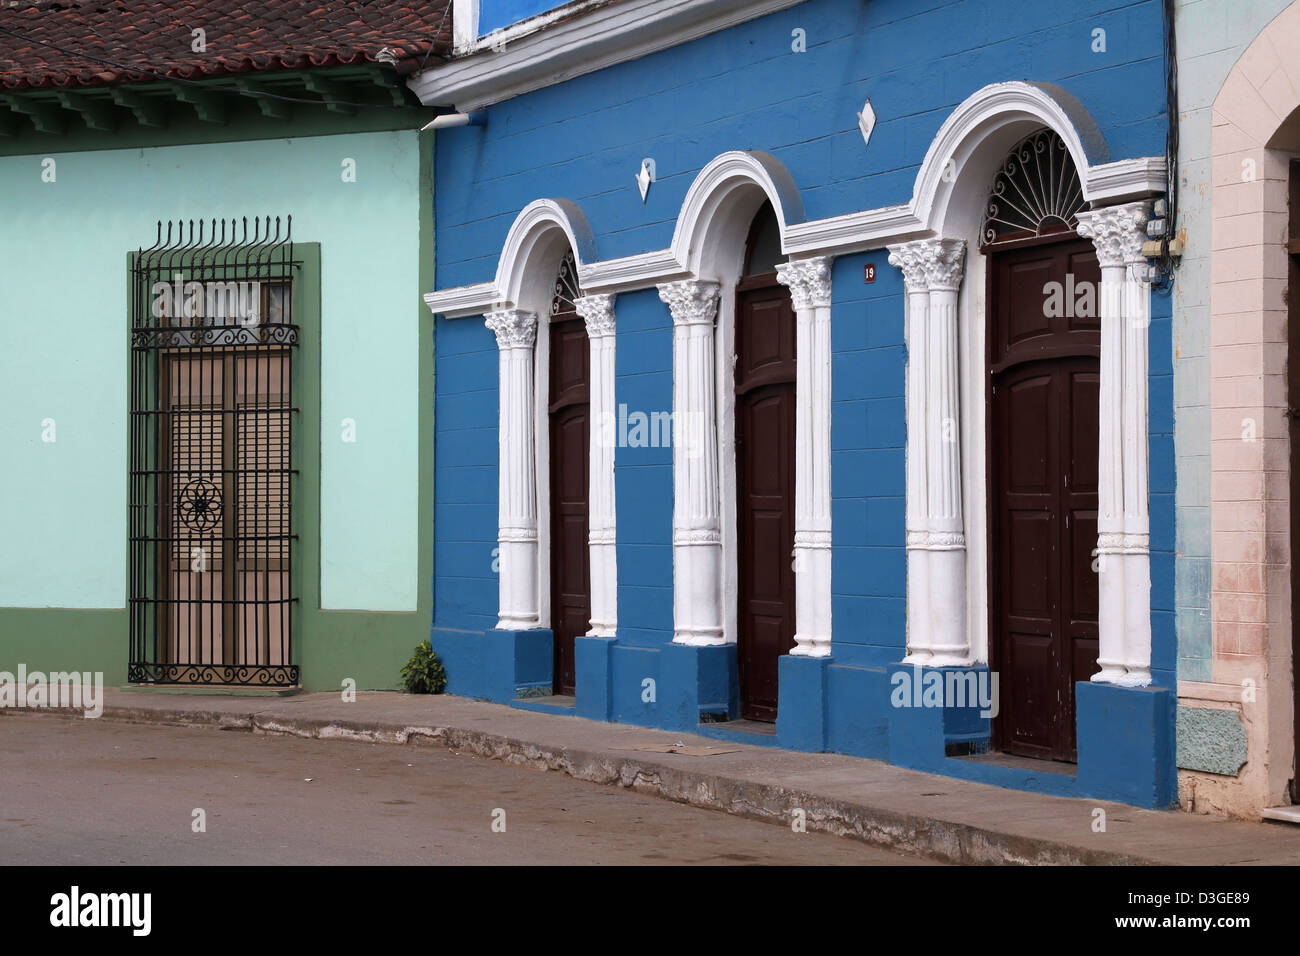 Sancti Spiritus, Cuba - colonial architecture. Colorful street view. Stock Photo